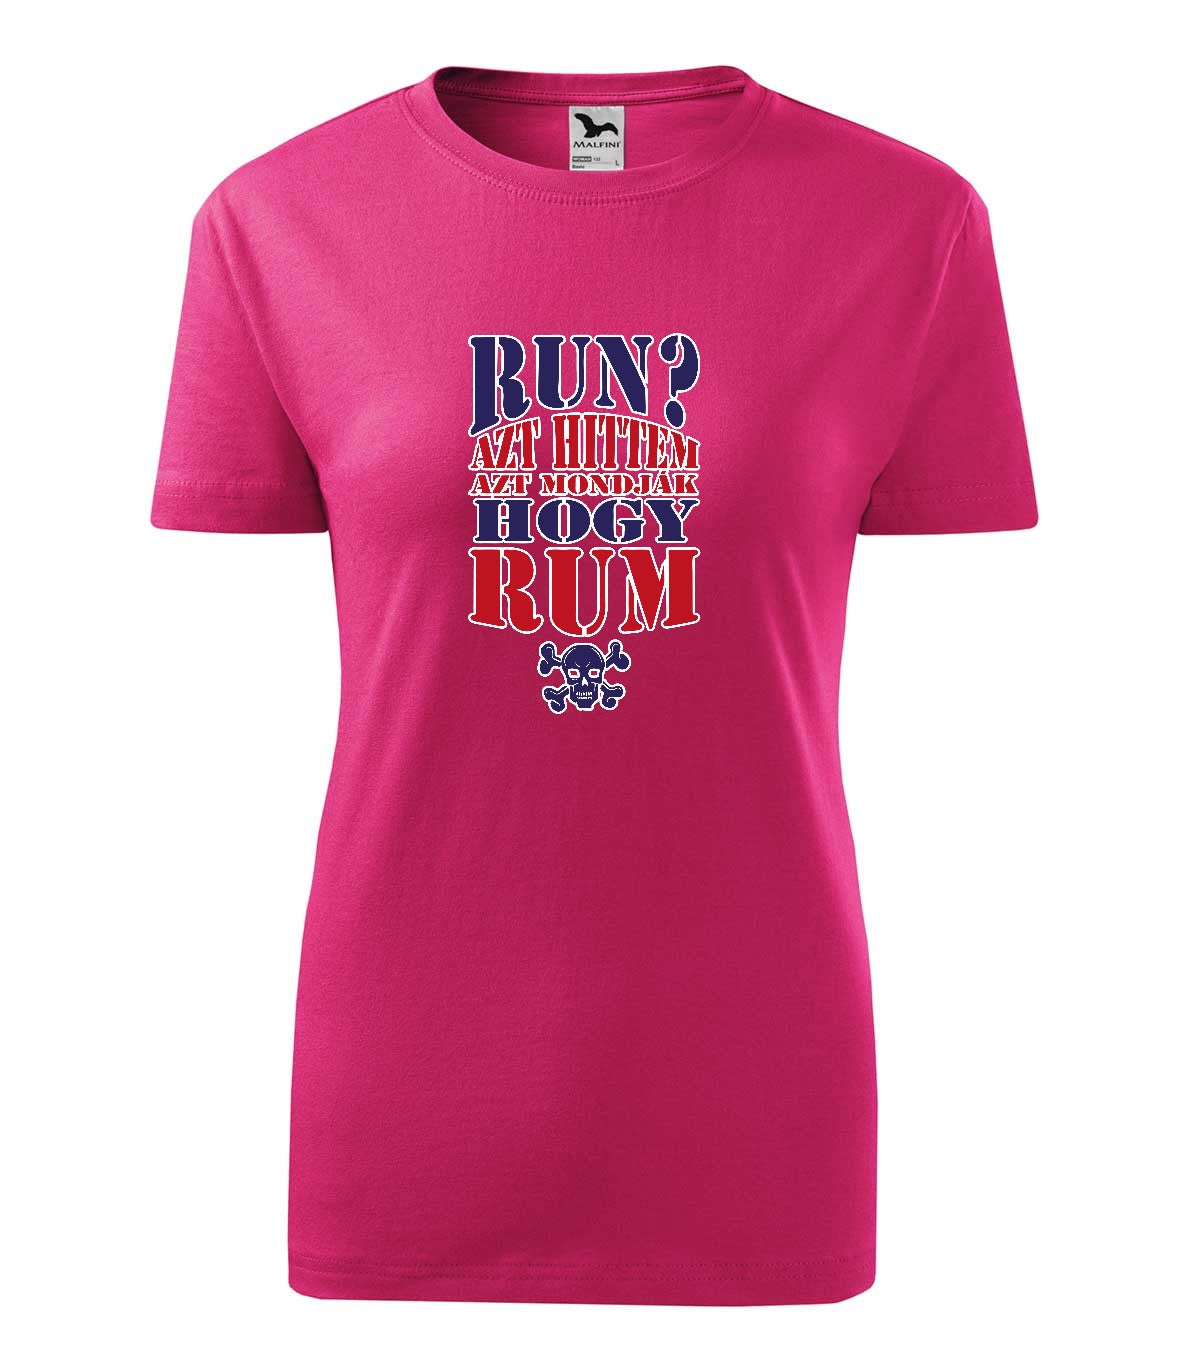 Run Rum női technikai póló